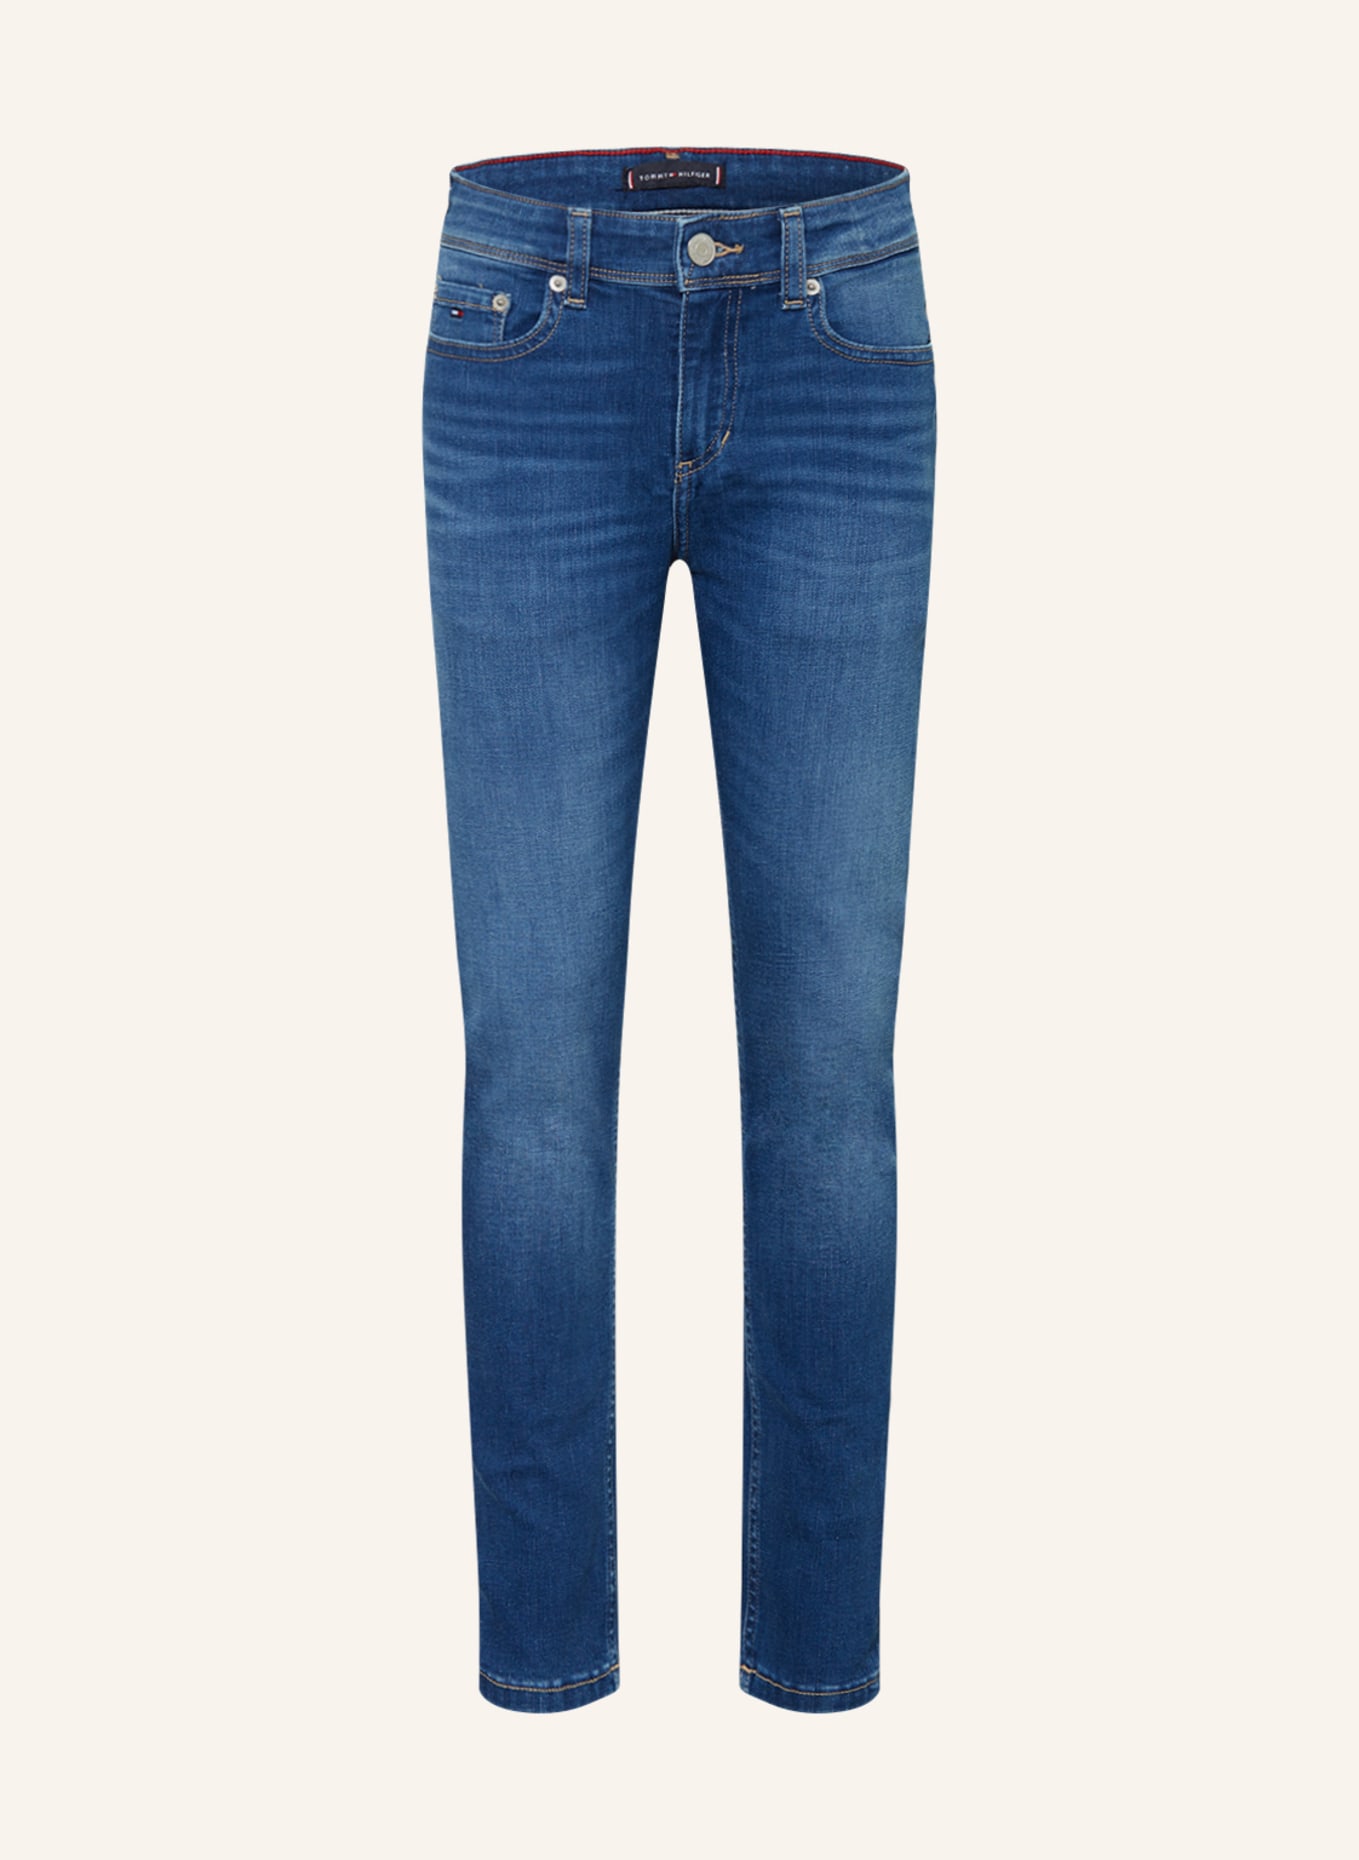 TOMMY HILFIGER Jeans SCANTON Slim Fit, Farbe: BLAU (Bild 1)